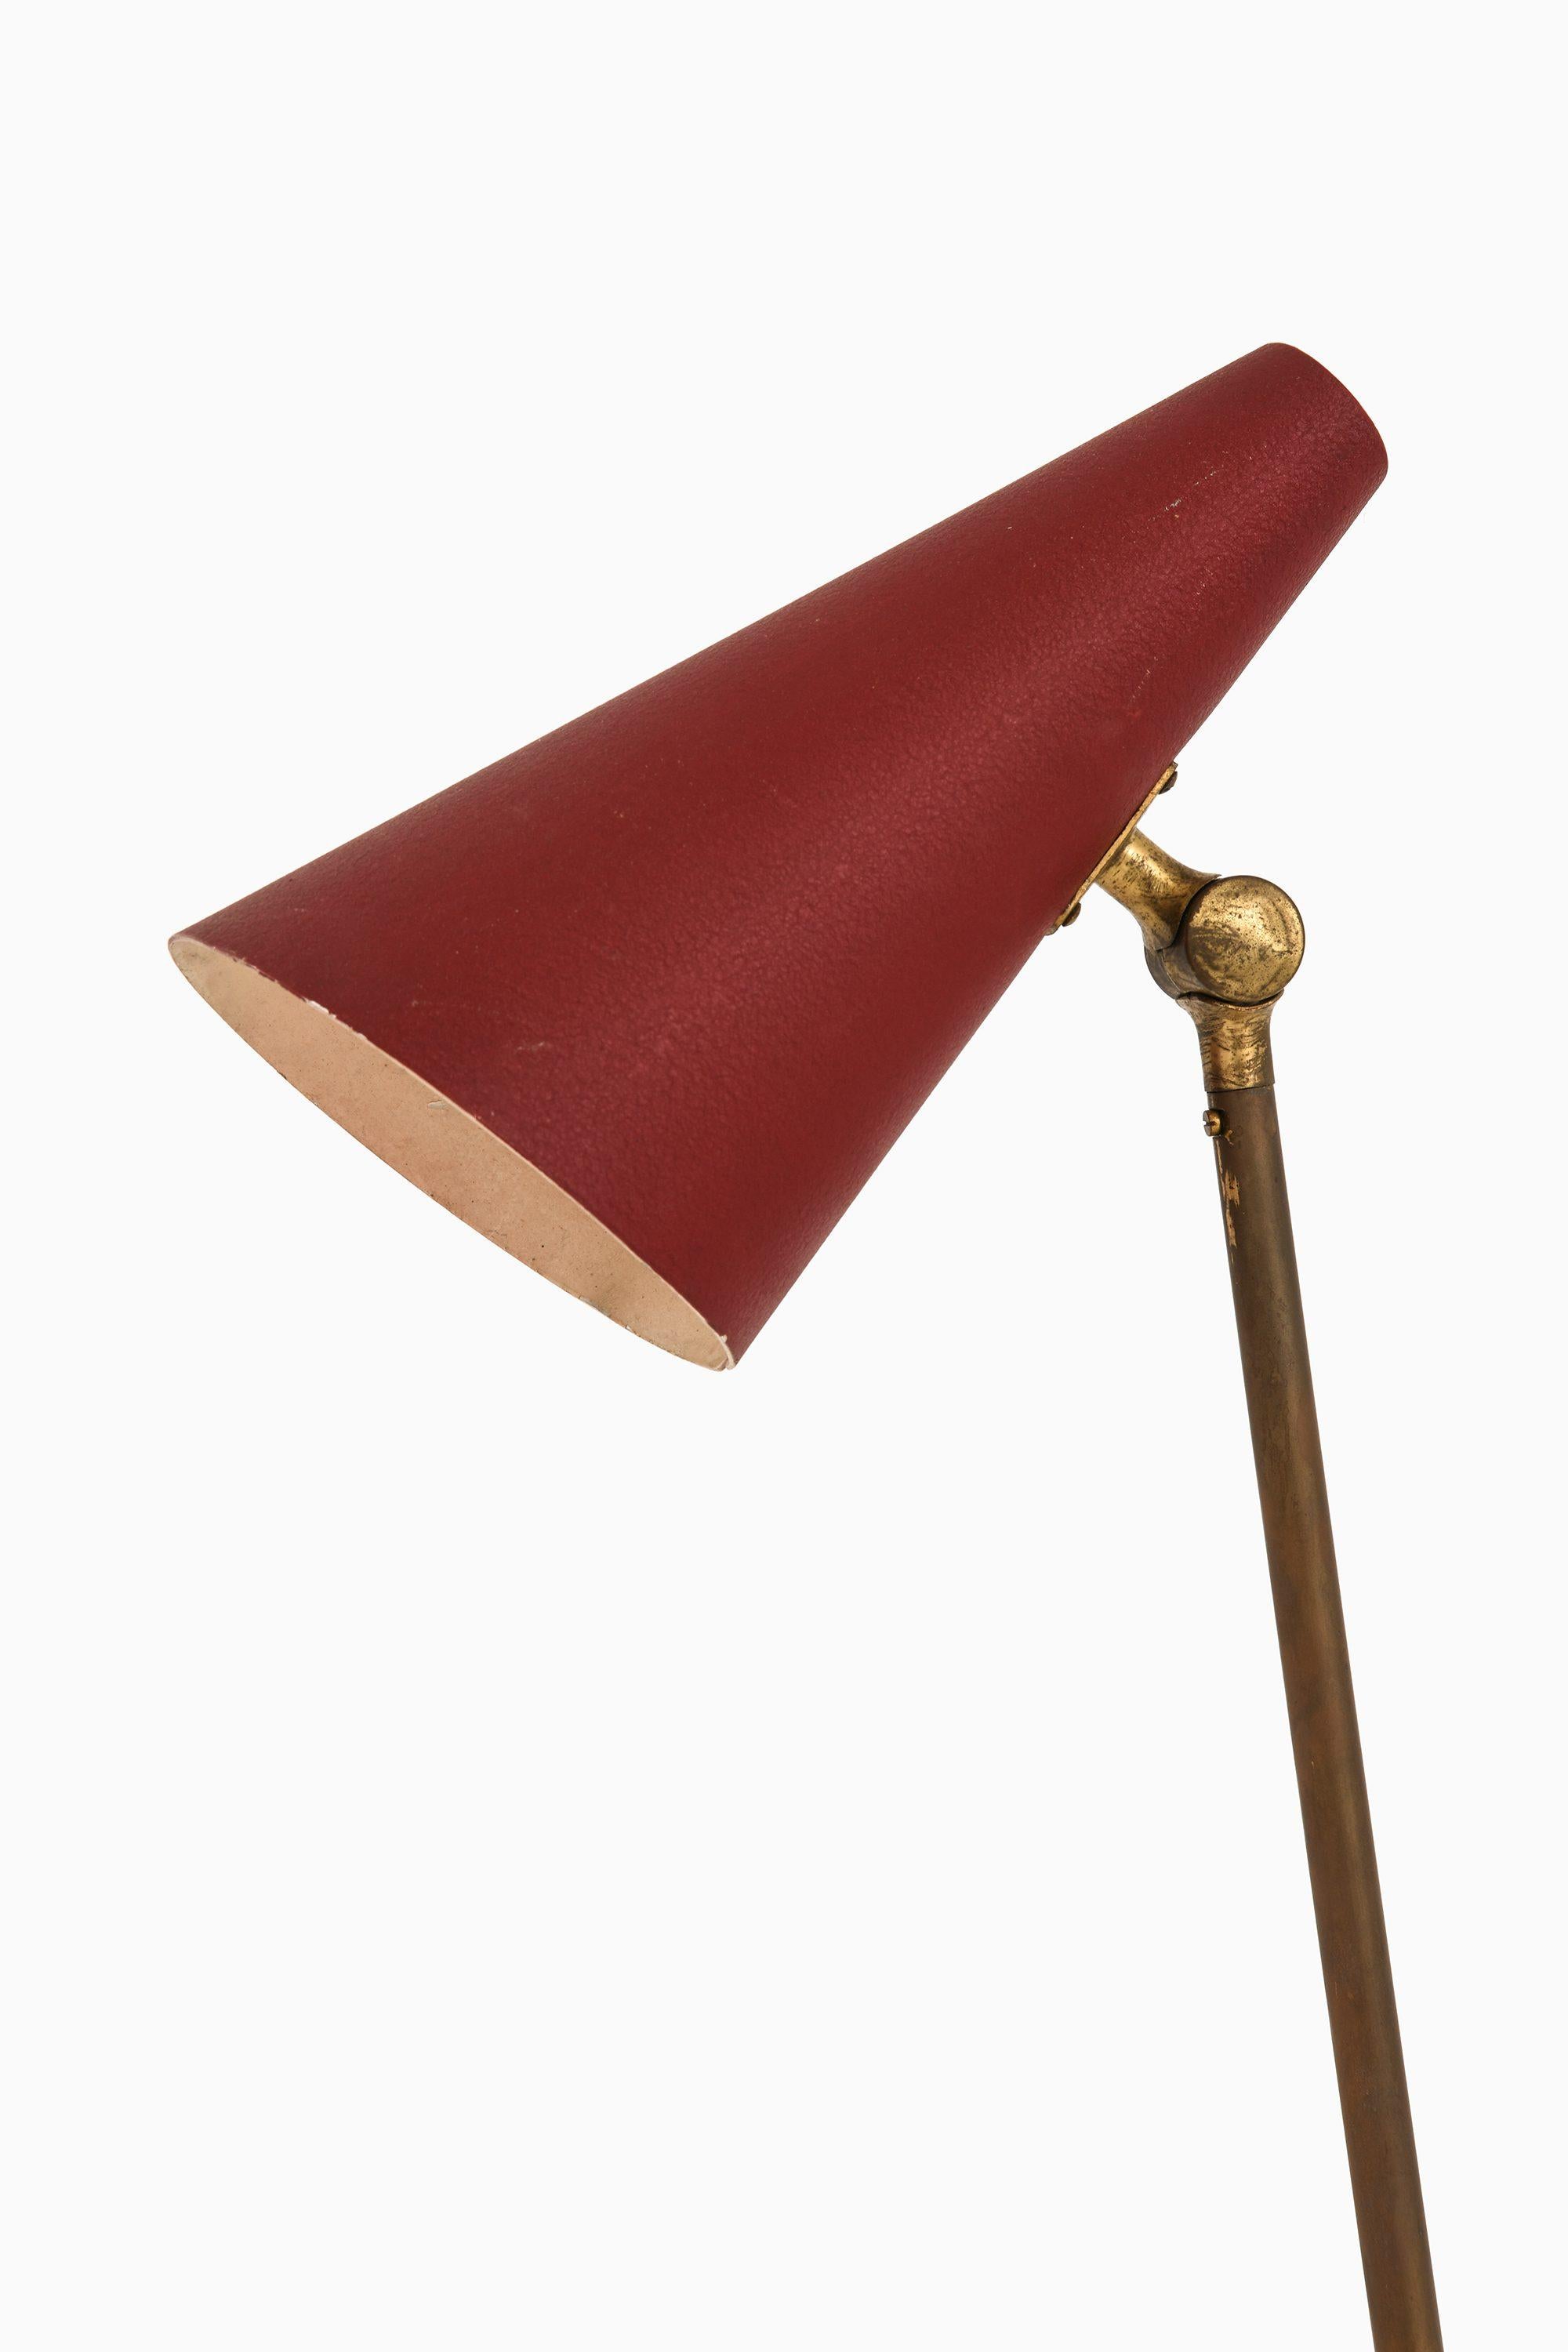 Swedish Bertil Brisborg Table Lamp in Brass and Red Lacquer, 1950’s Nordiska Kompaniet For Sale